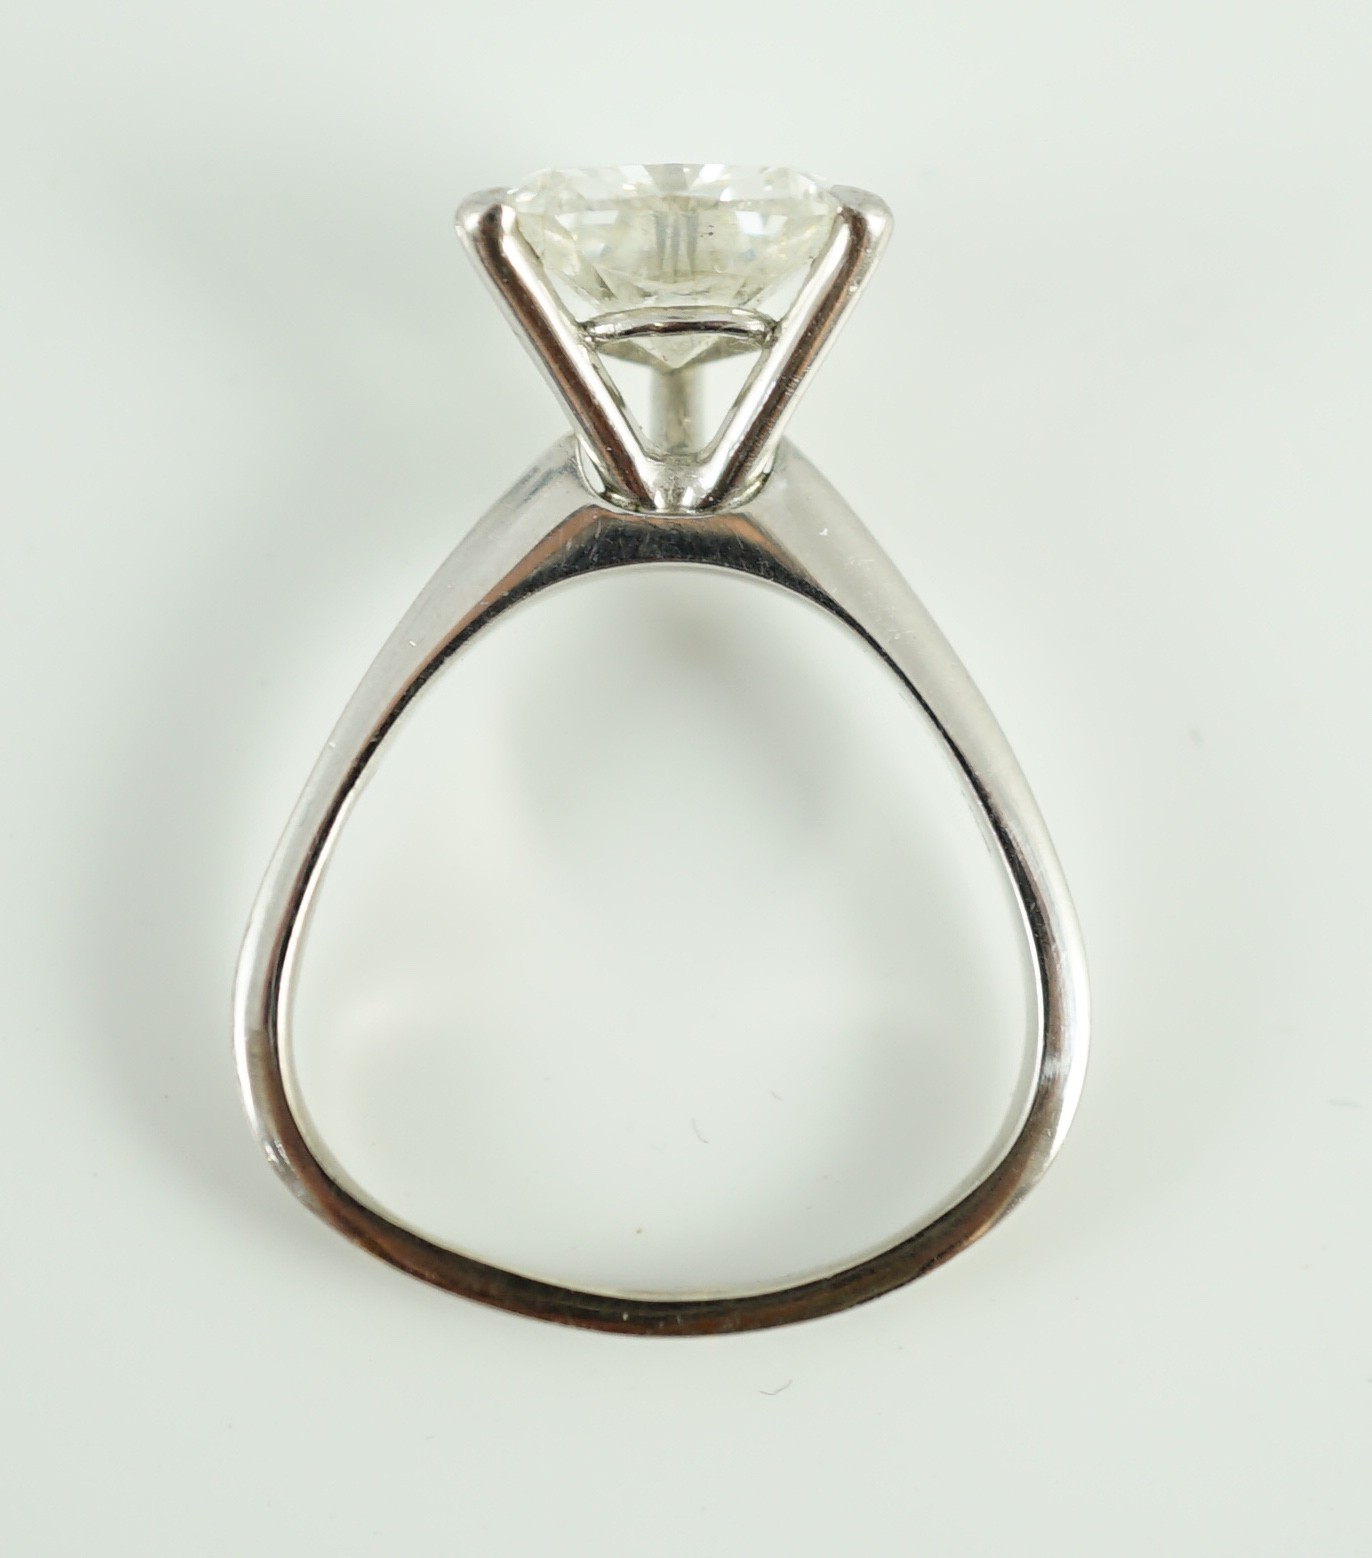 A modern platinum and solitaire trillion cut diamond set ring